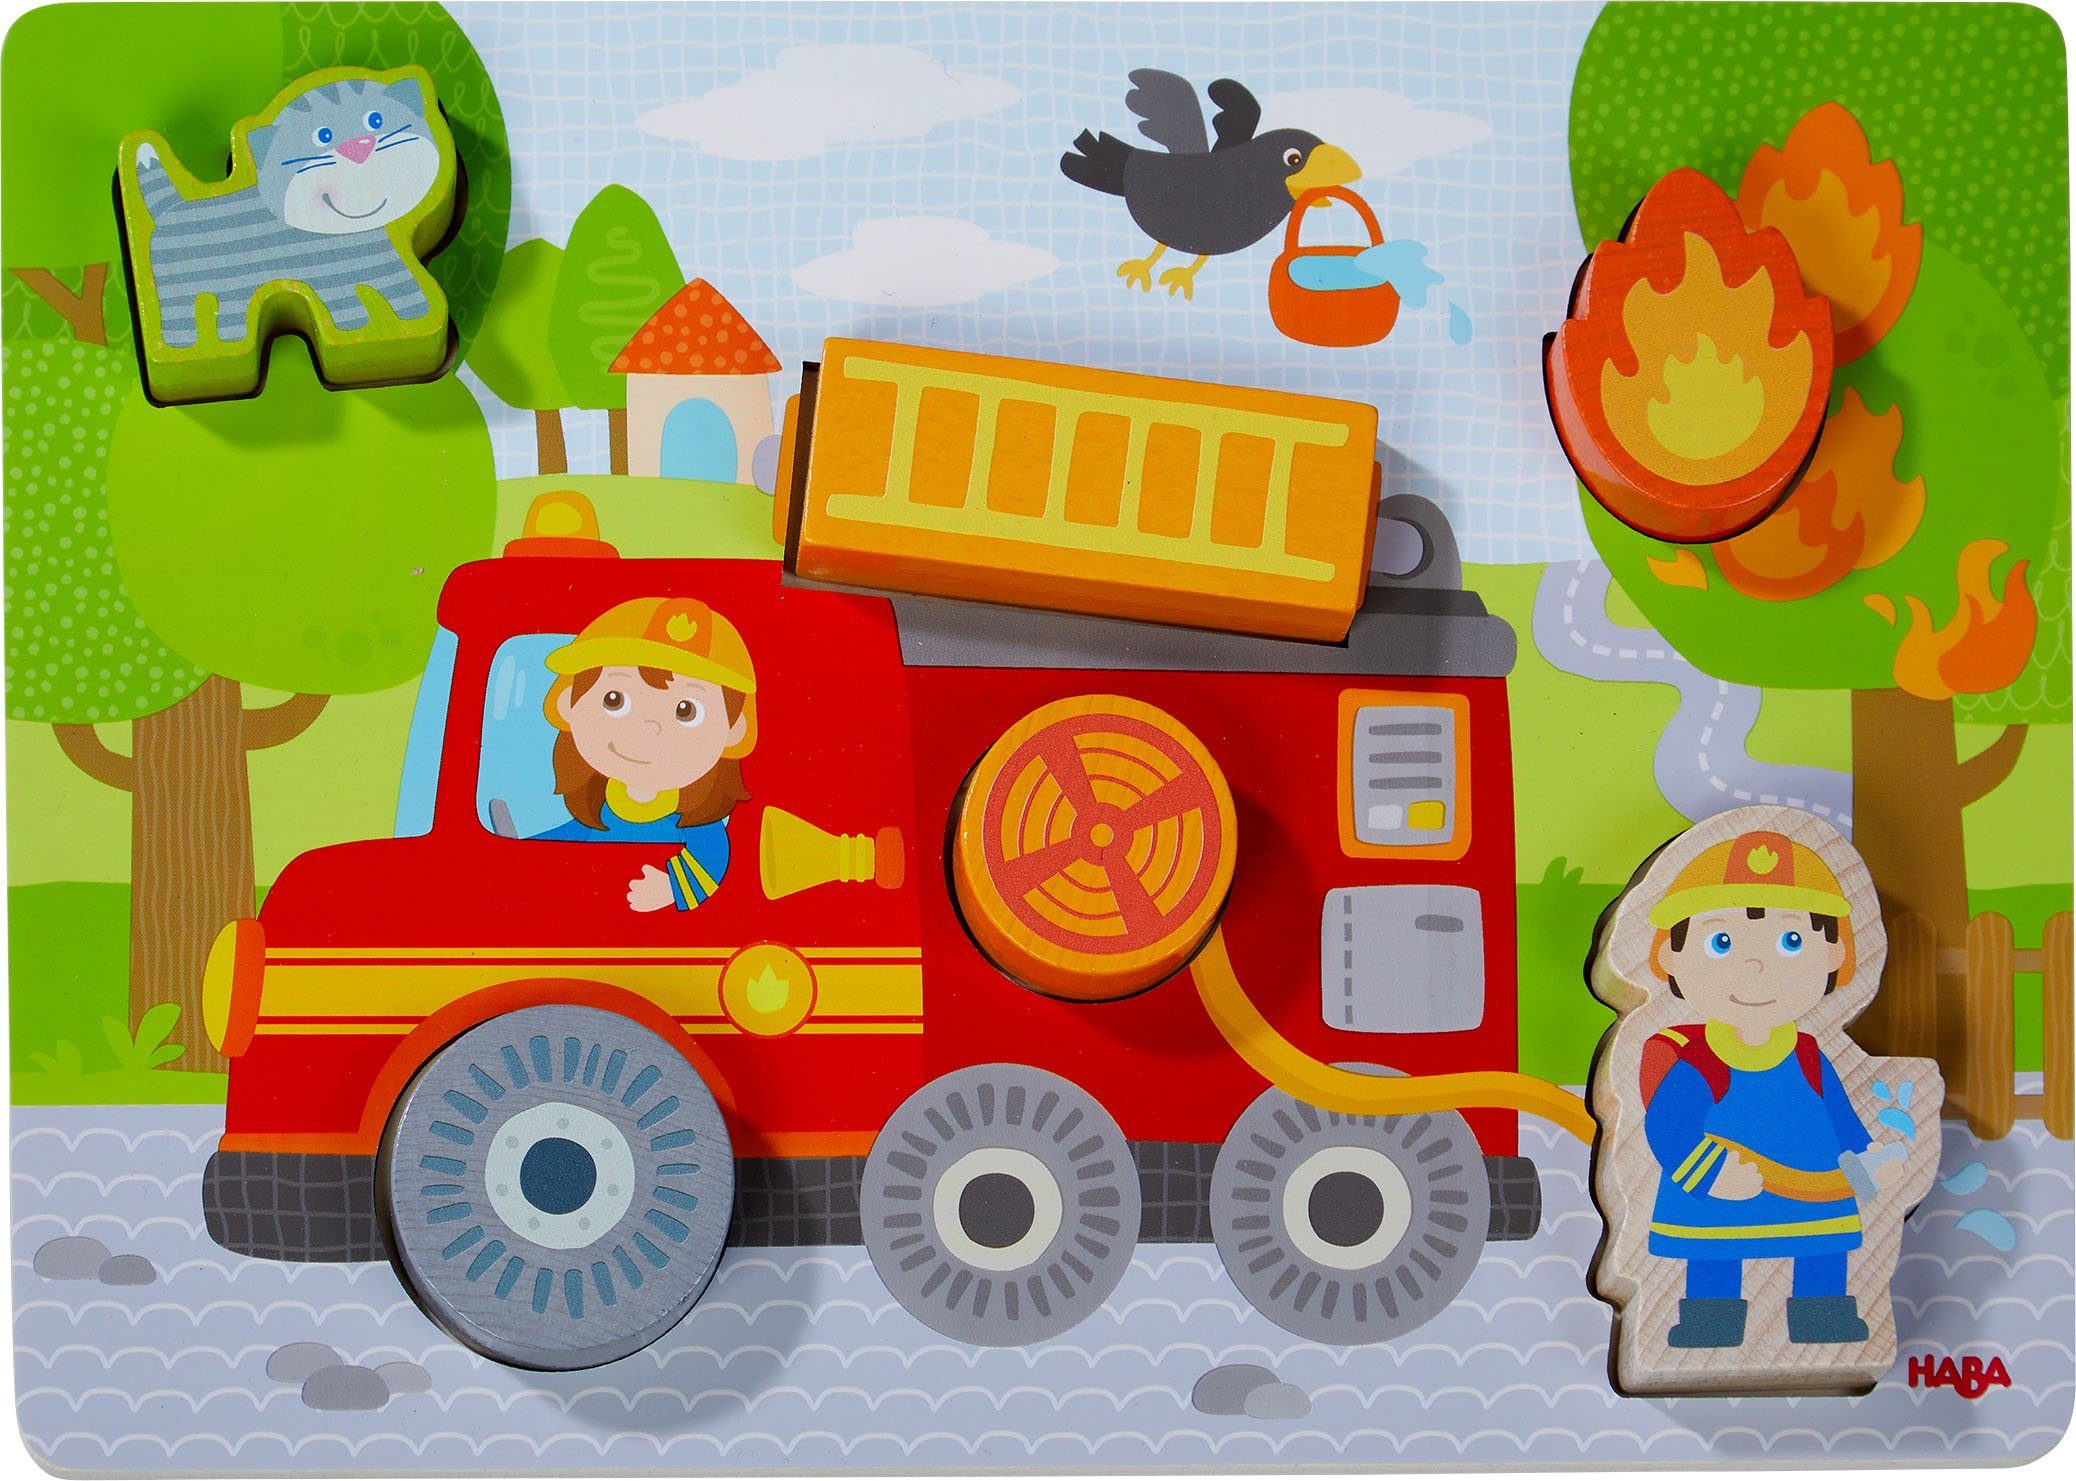 Haba Steckpuzzle Holzspielzeug, Feuerwehrauto, aus Puzzleteile, 7 Holz